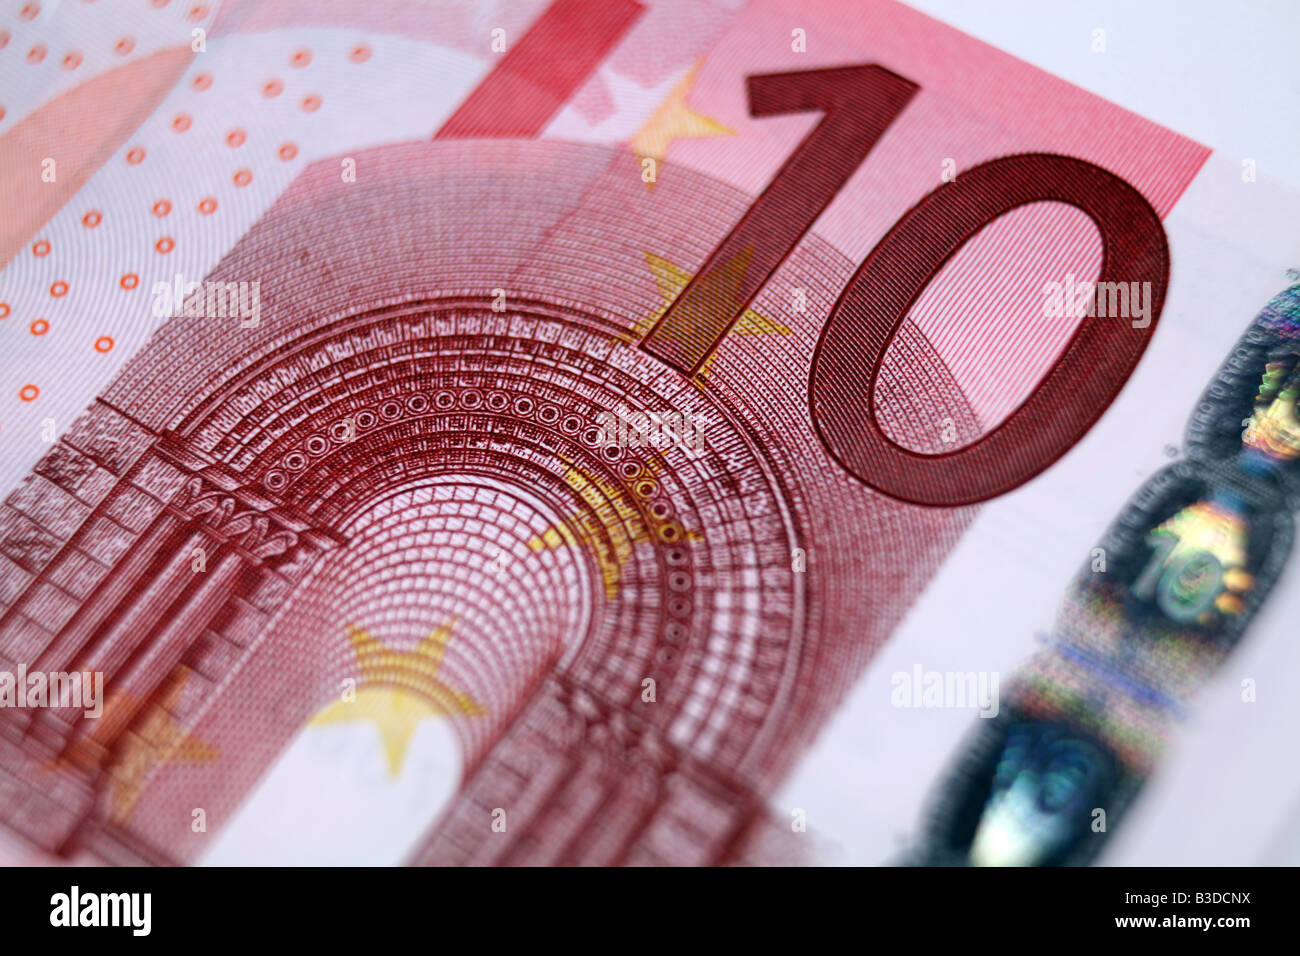 Ten 10 Euro Bank notes from Europe Stock Photo